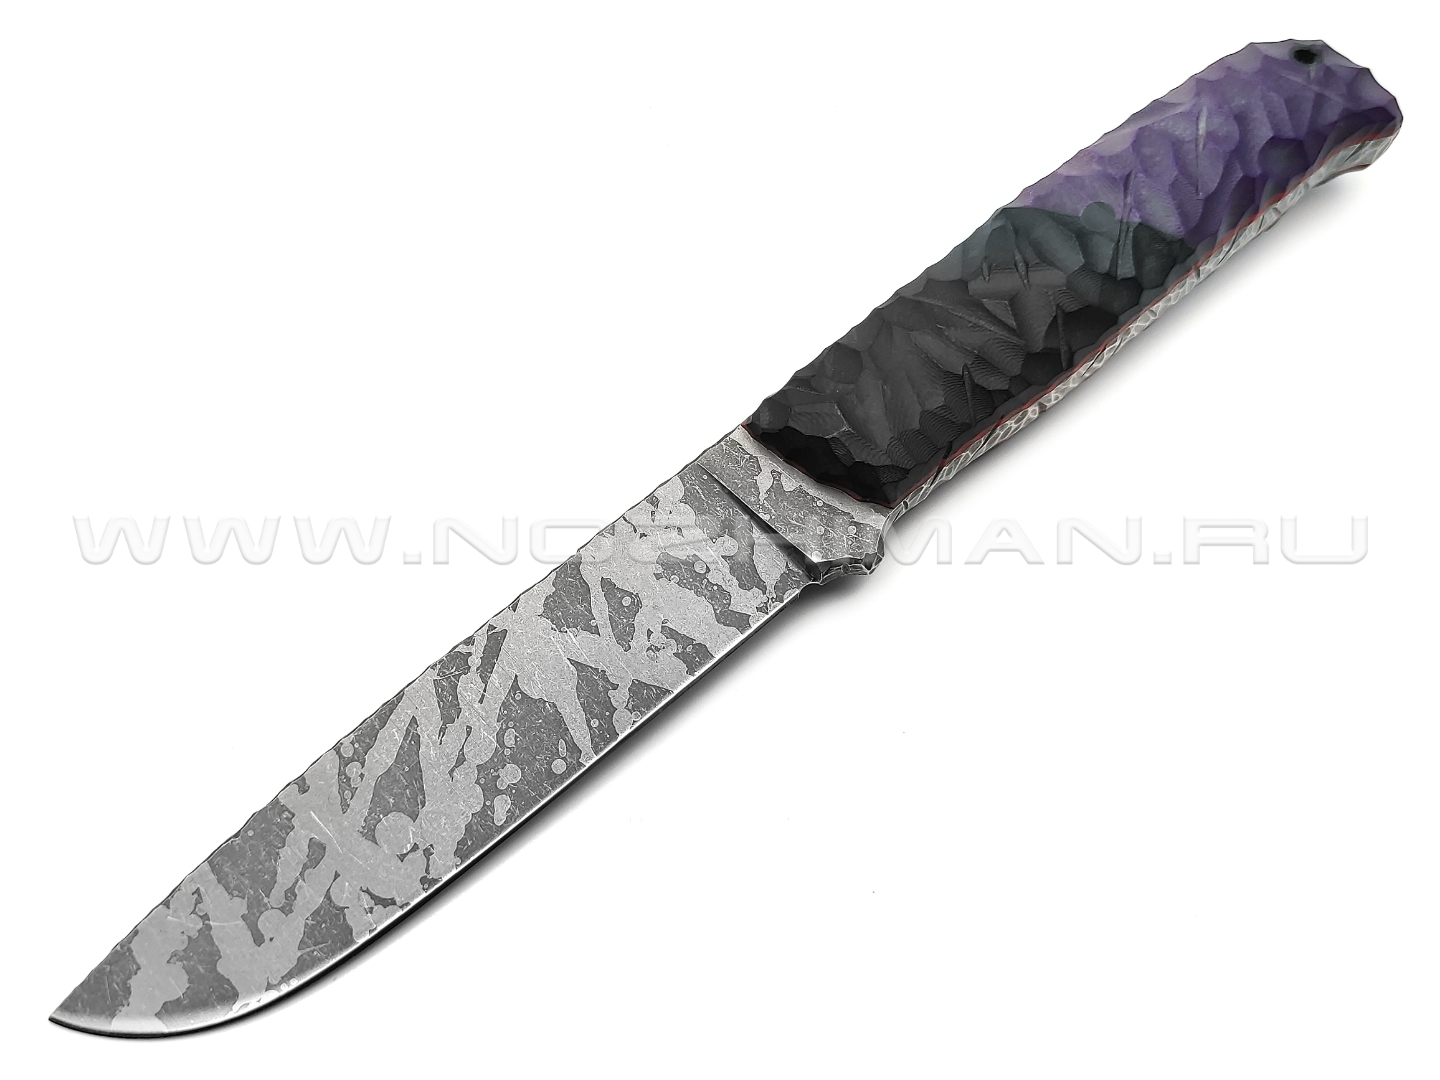 Волчий Век нож Wolfkniven Custom сталь 95Х18 WA Camo, обух 6.2 мм, рукоять G10 black & purple, пины карбон